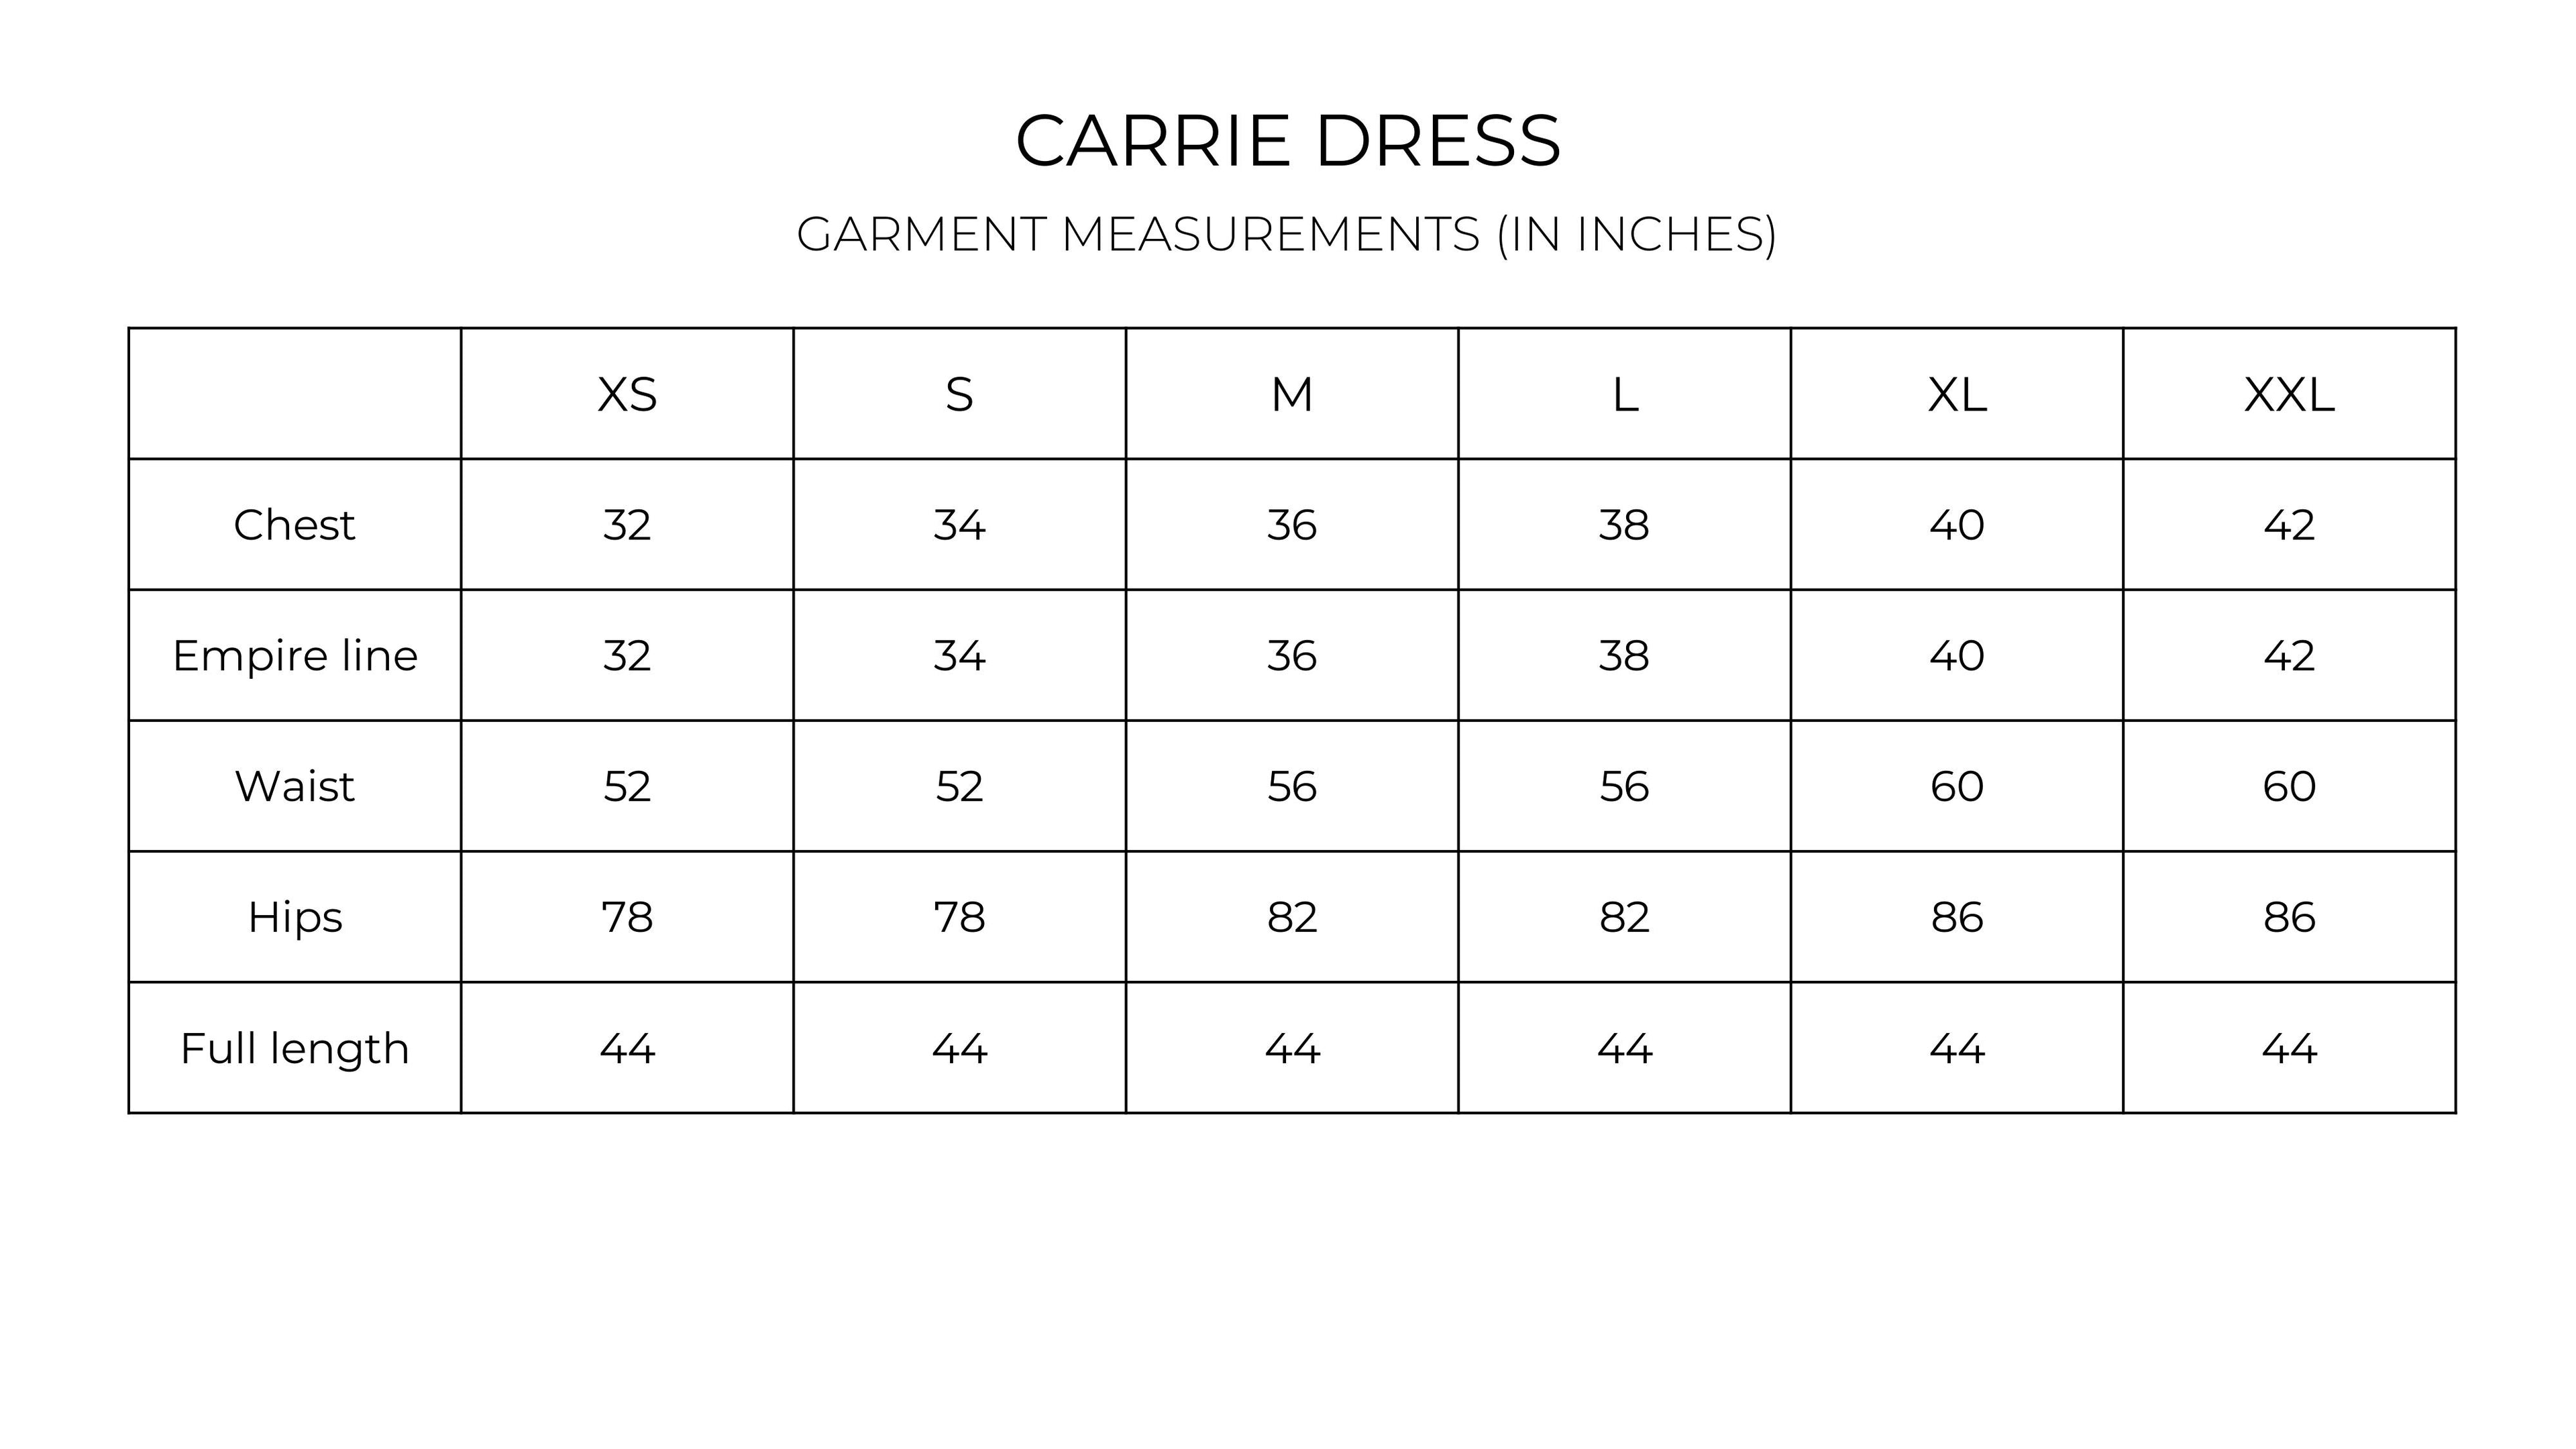 Carrie dress